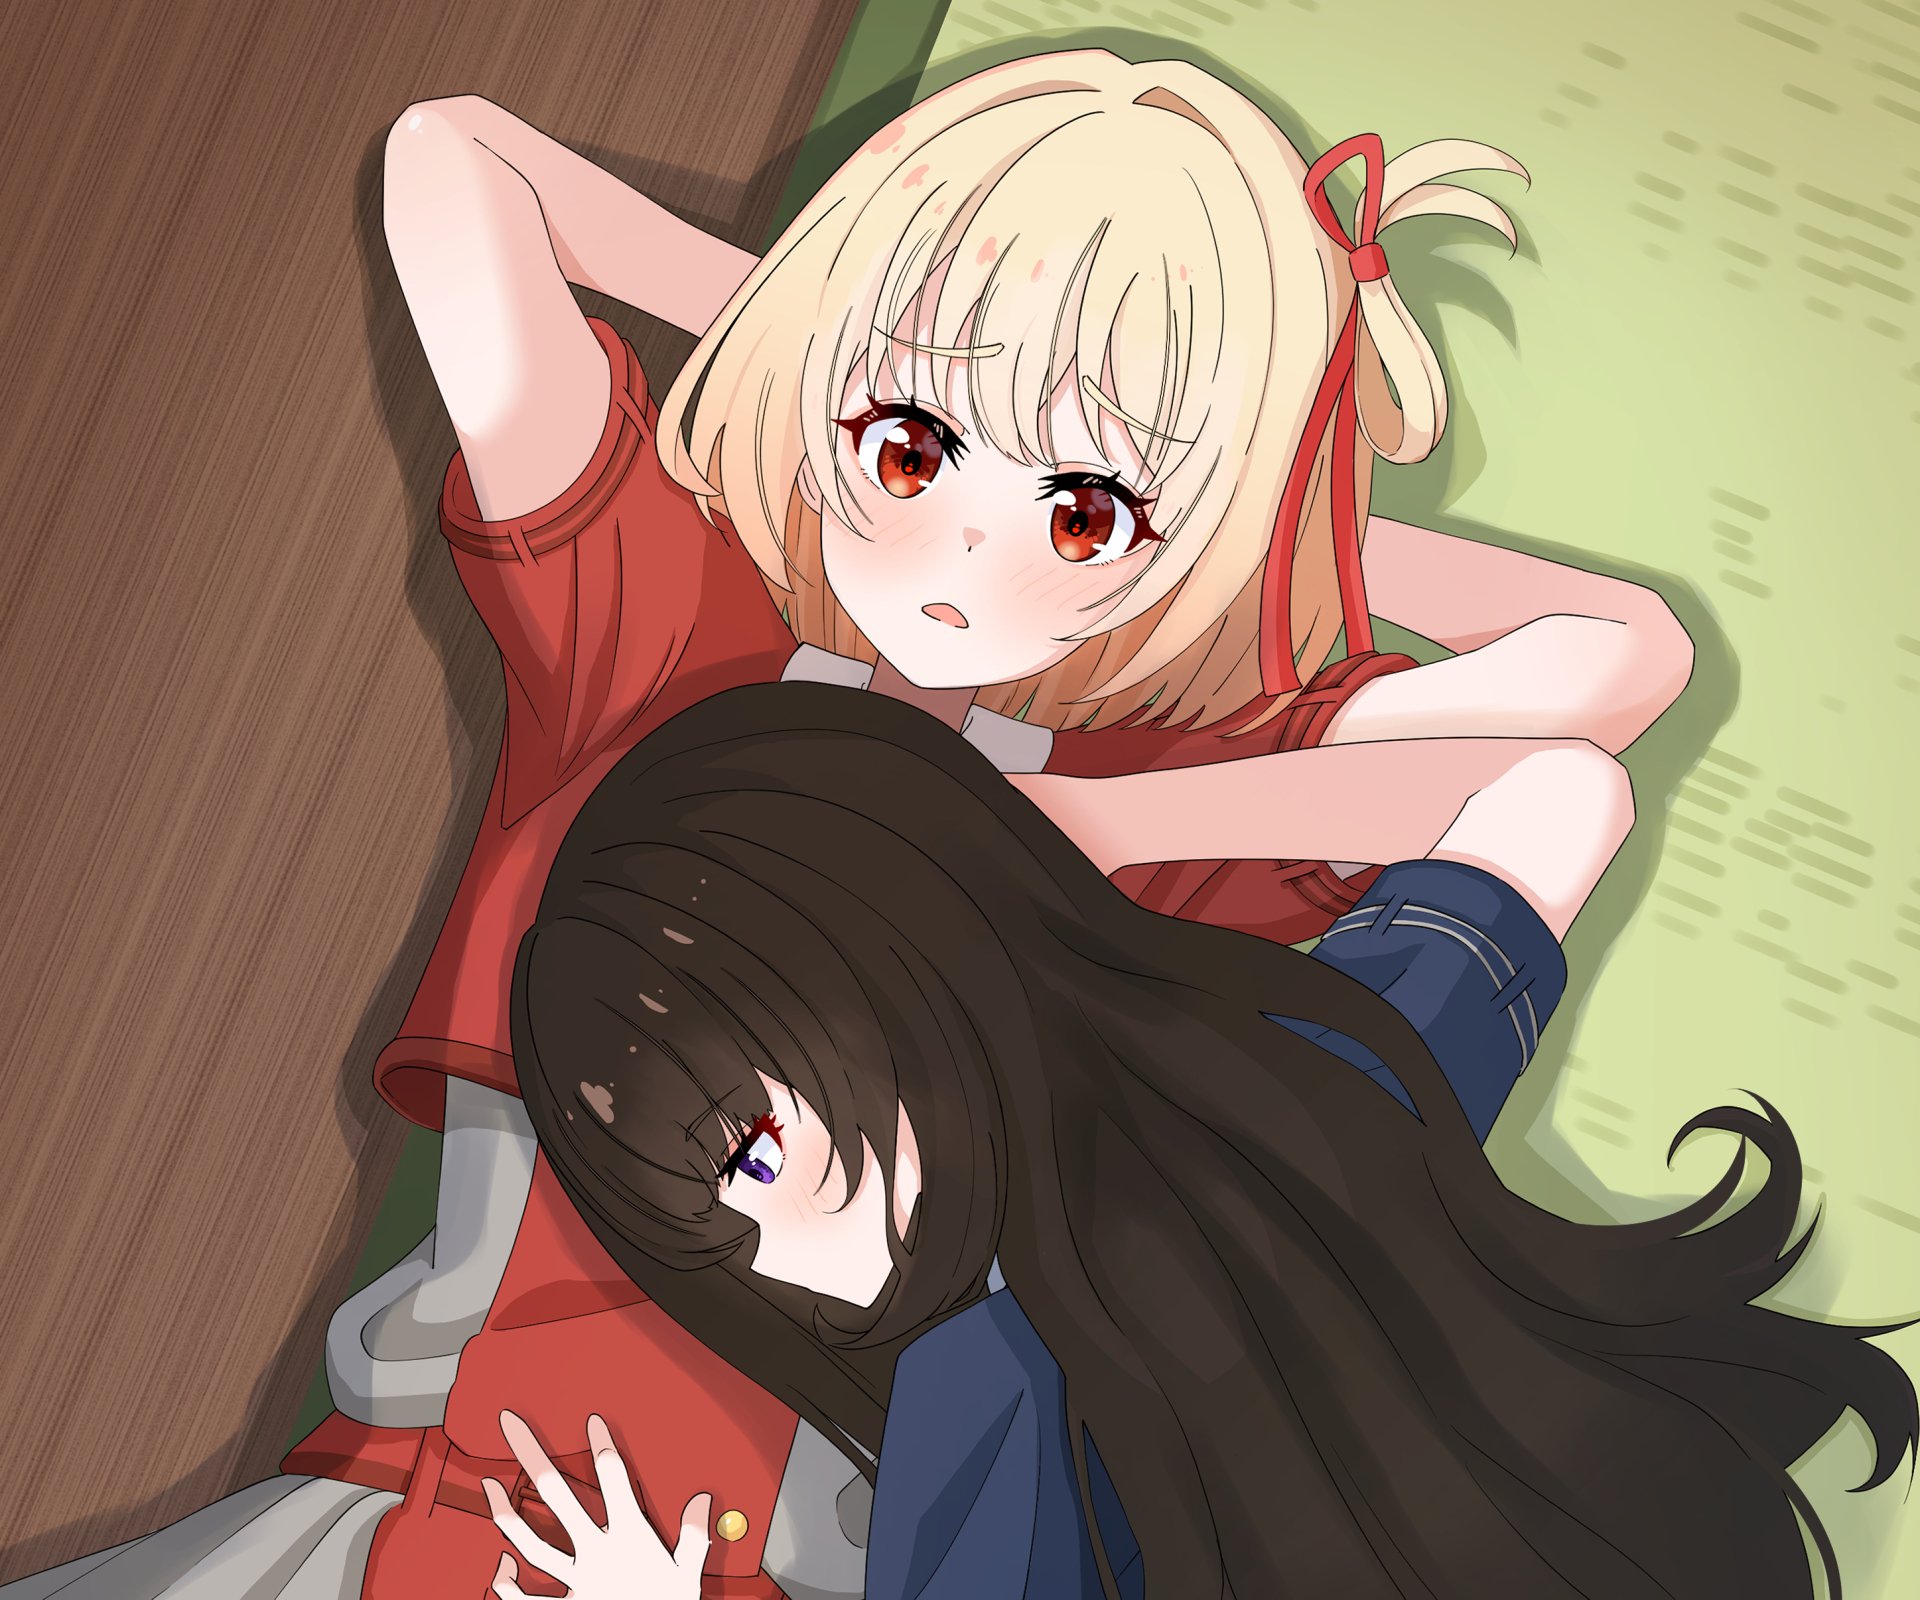 Fluffy comforting manga [NON ROMANCE] - by NobodyKnowsA | Anime-Planet